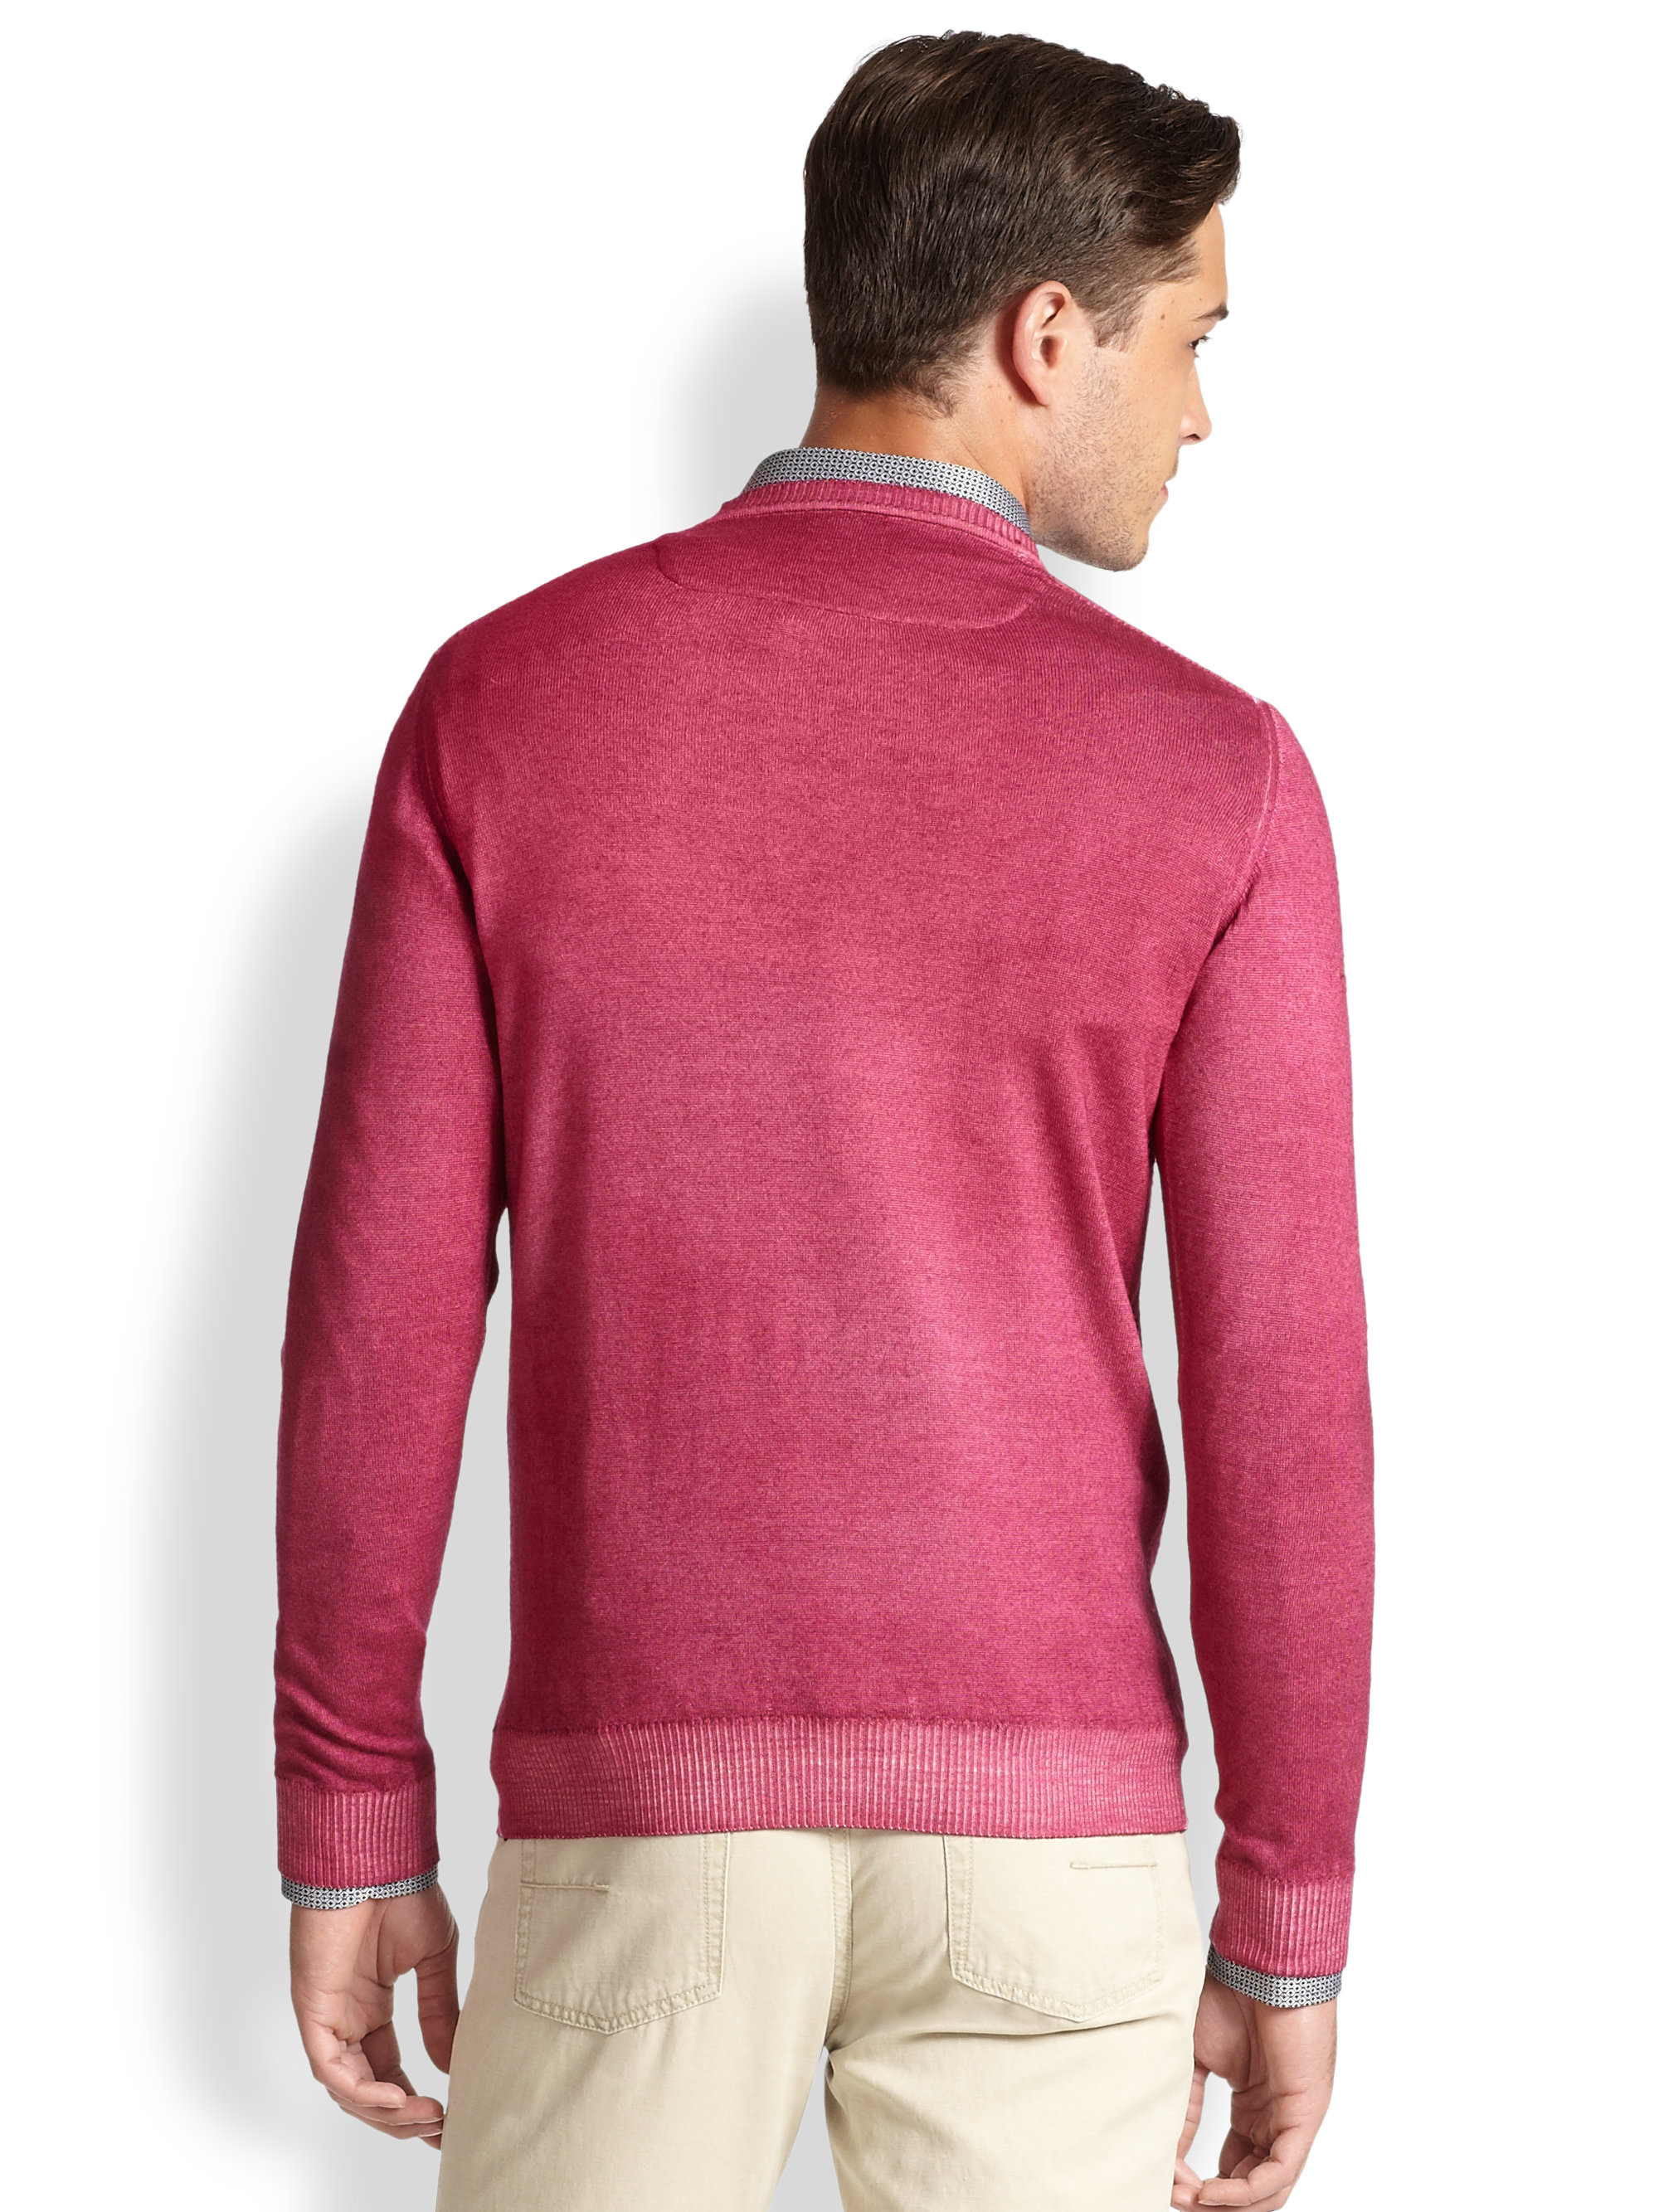 Lyst - Sand Merino Wool Crewneck Sweater in Pink for Men